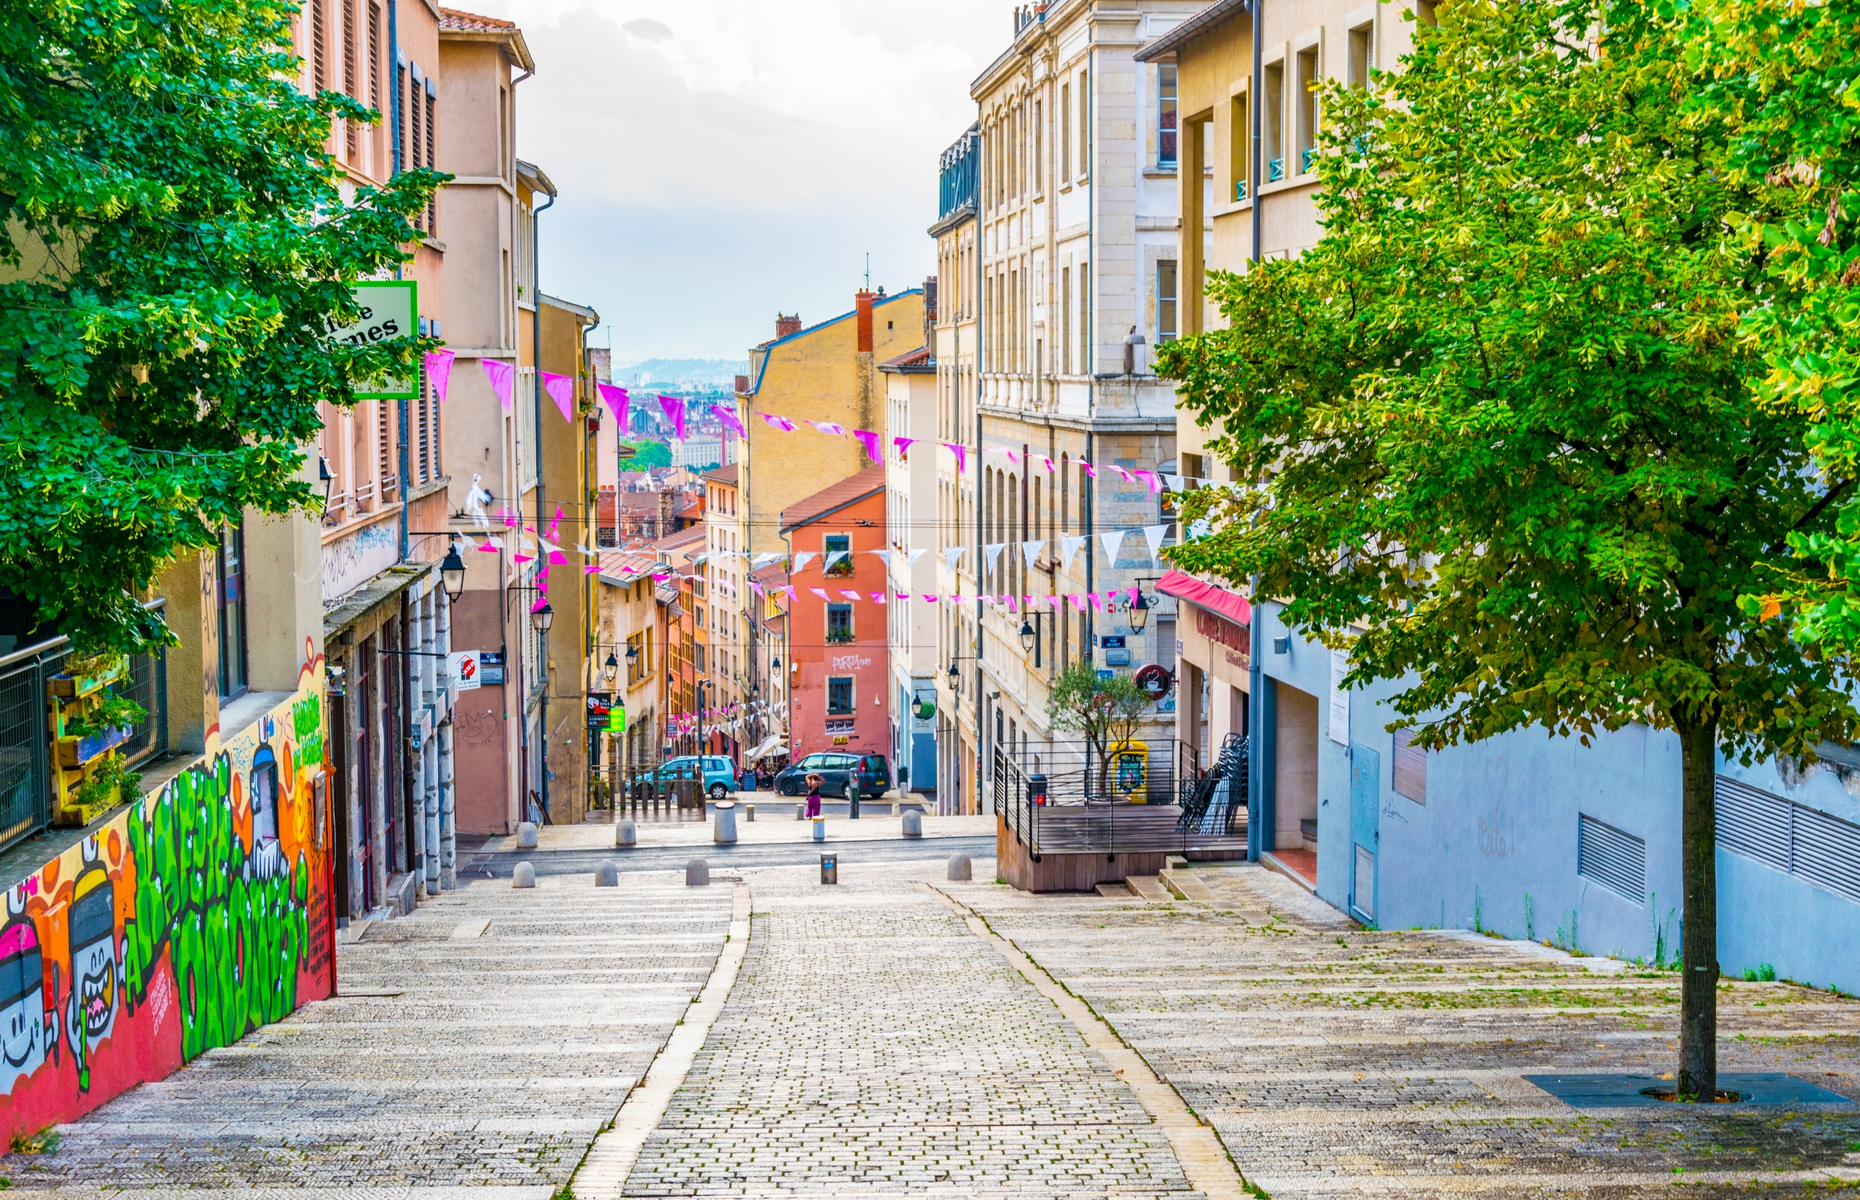 Street in Lyon, France (Image: trabantos/Shutterstock)